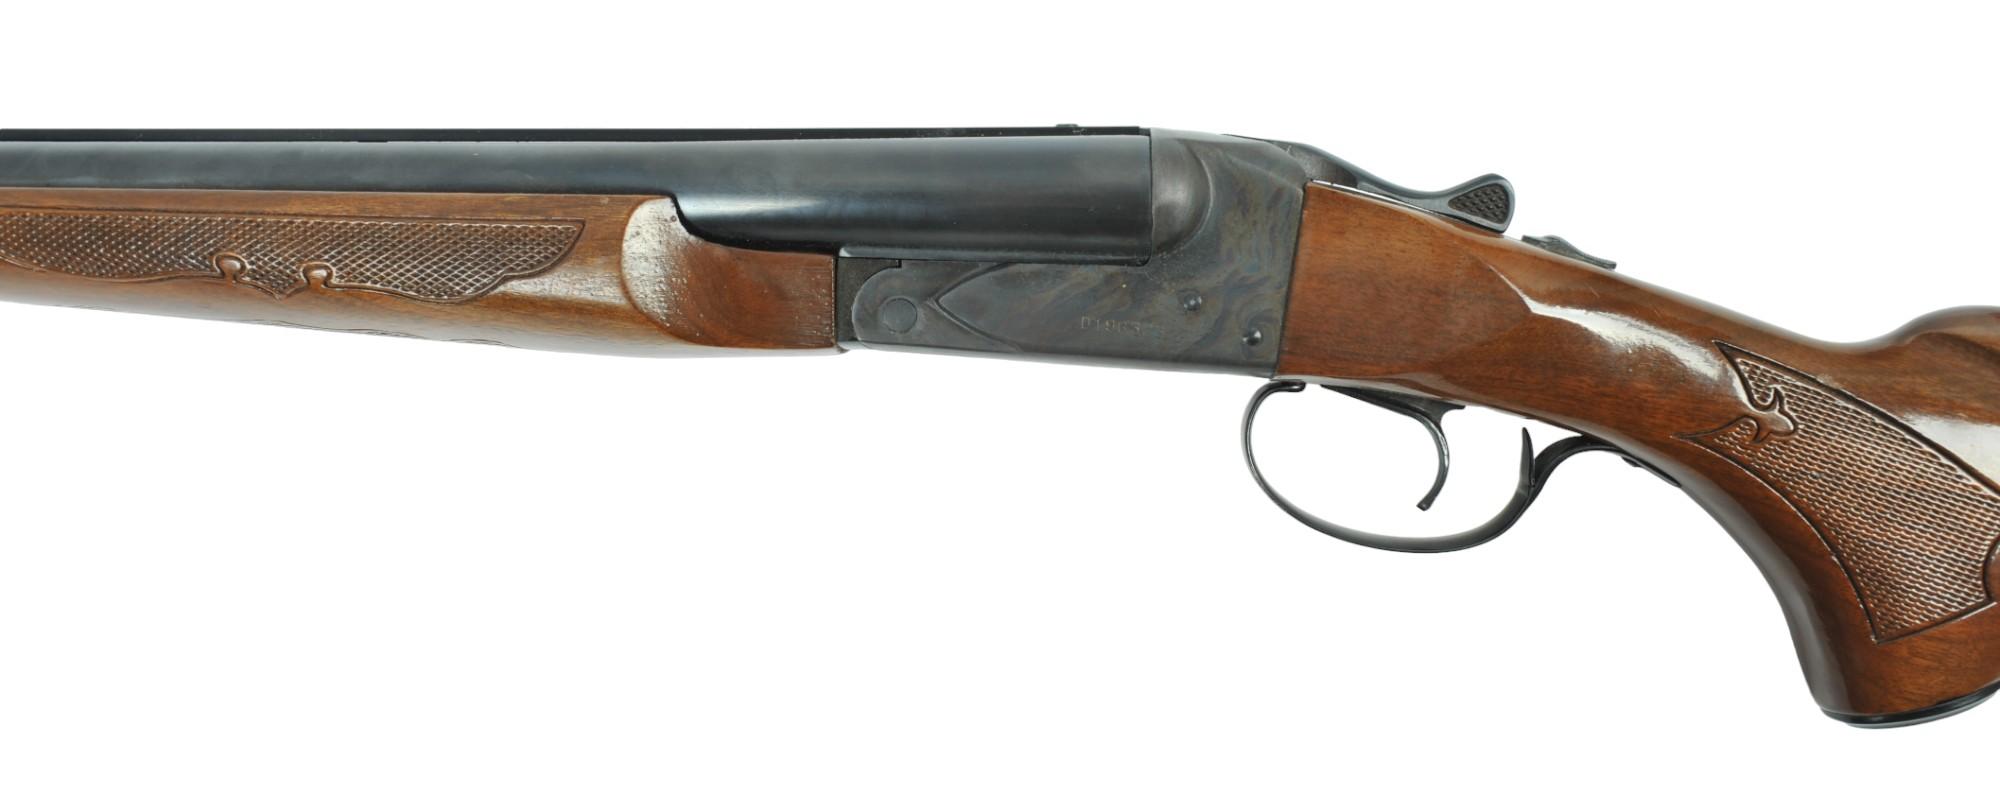 Savage Fox Model BSE Series H 12 Gauge Double-barrel Shotgun FFL Required: D196323  (MGX1)